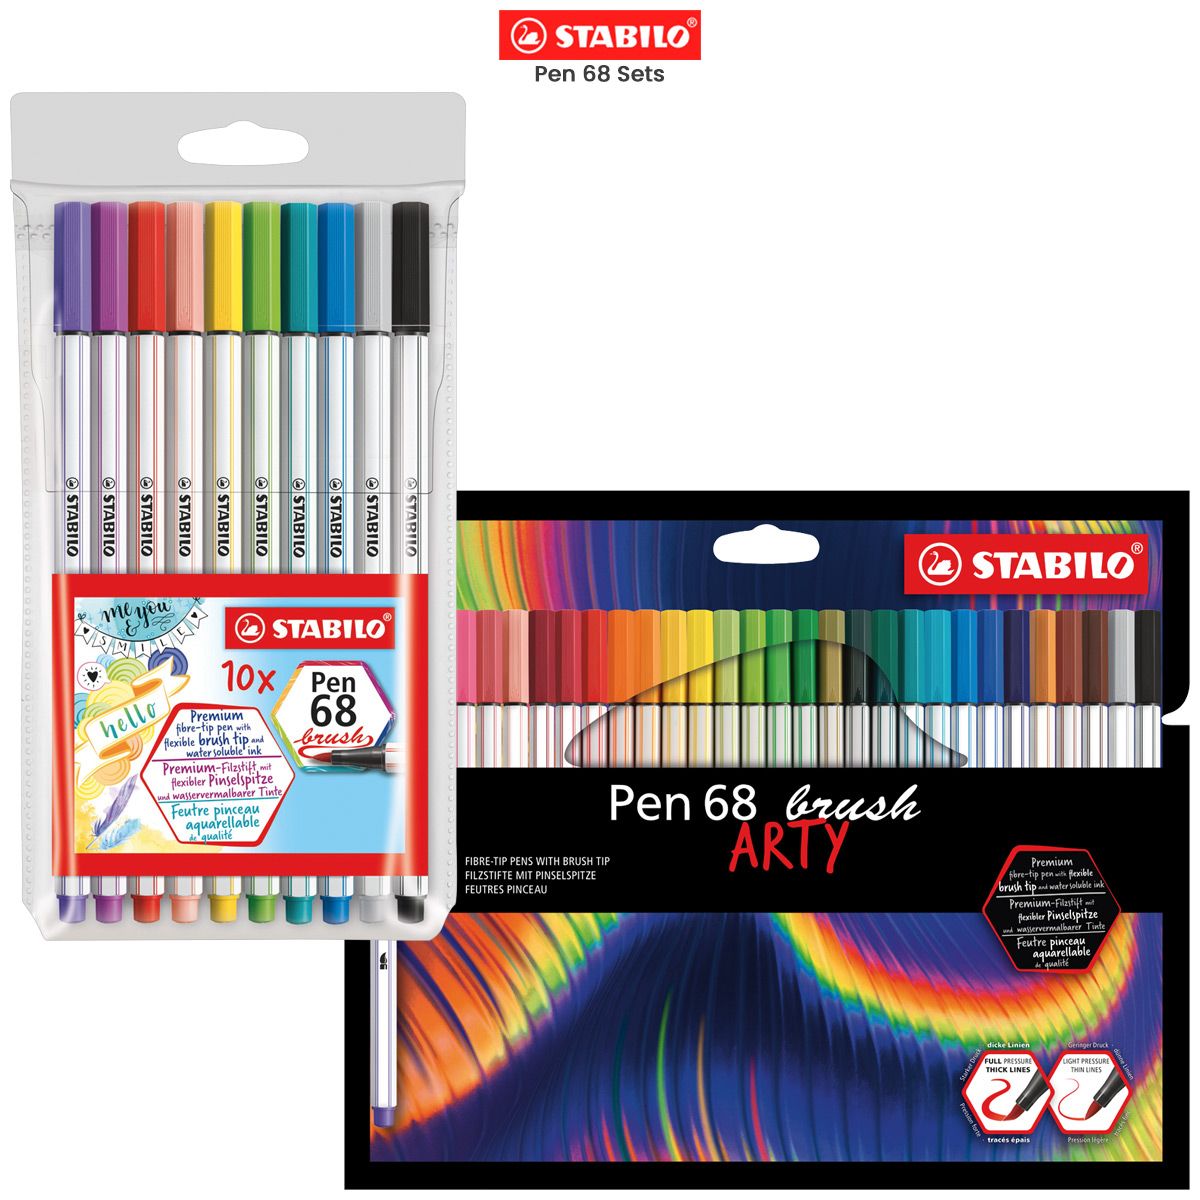 Premium Fibre-Tip Pen STABILO Pen 68 brush Wallet of 6 Assorted Colours 